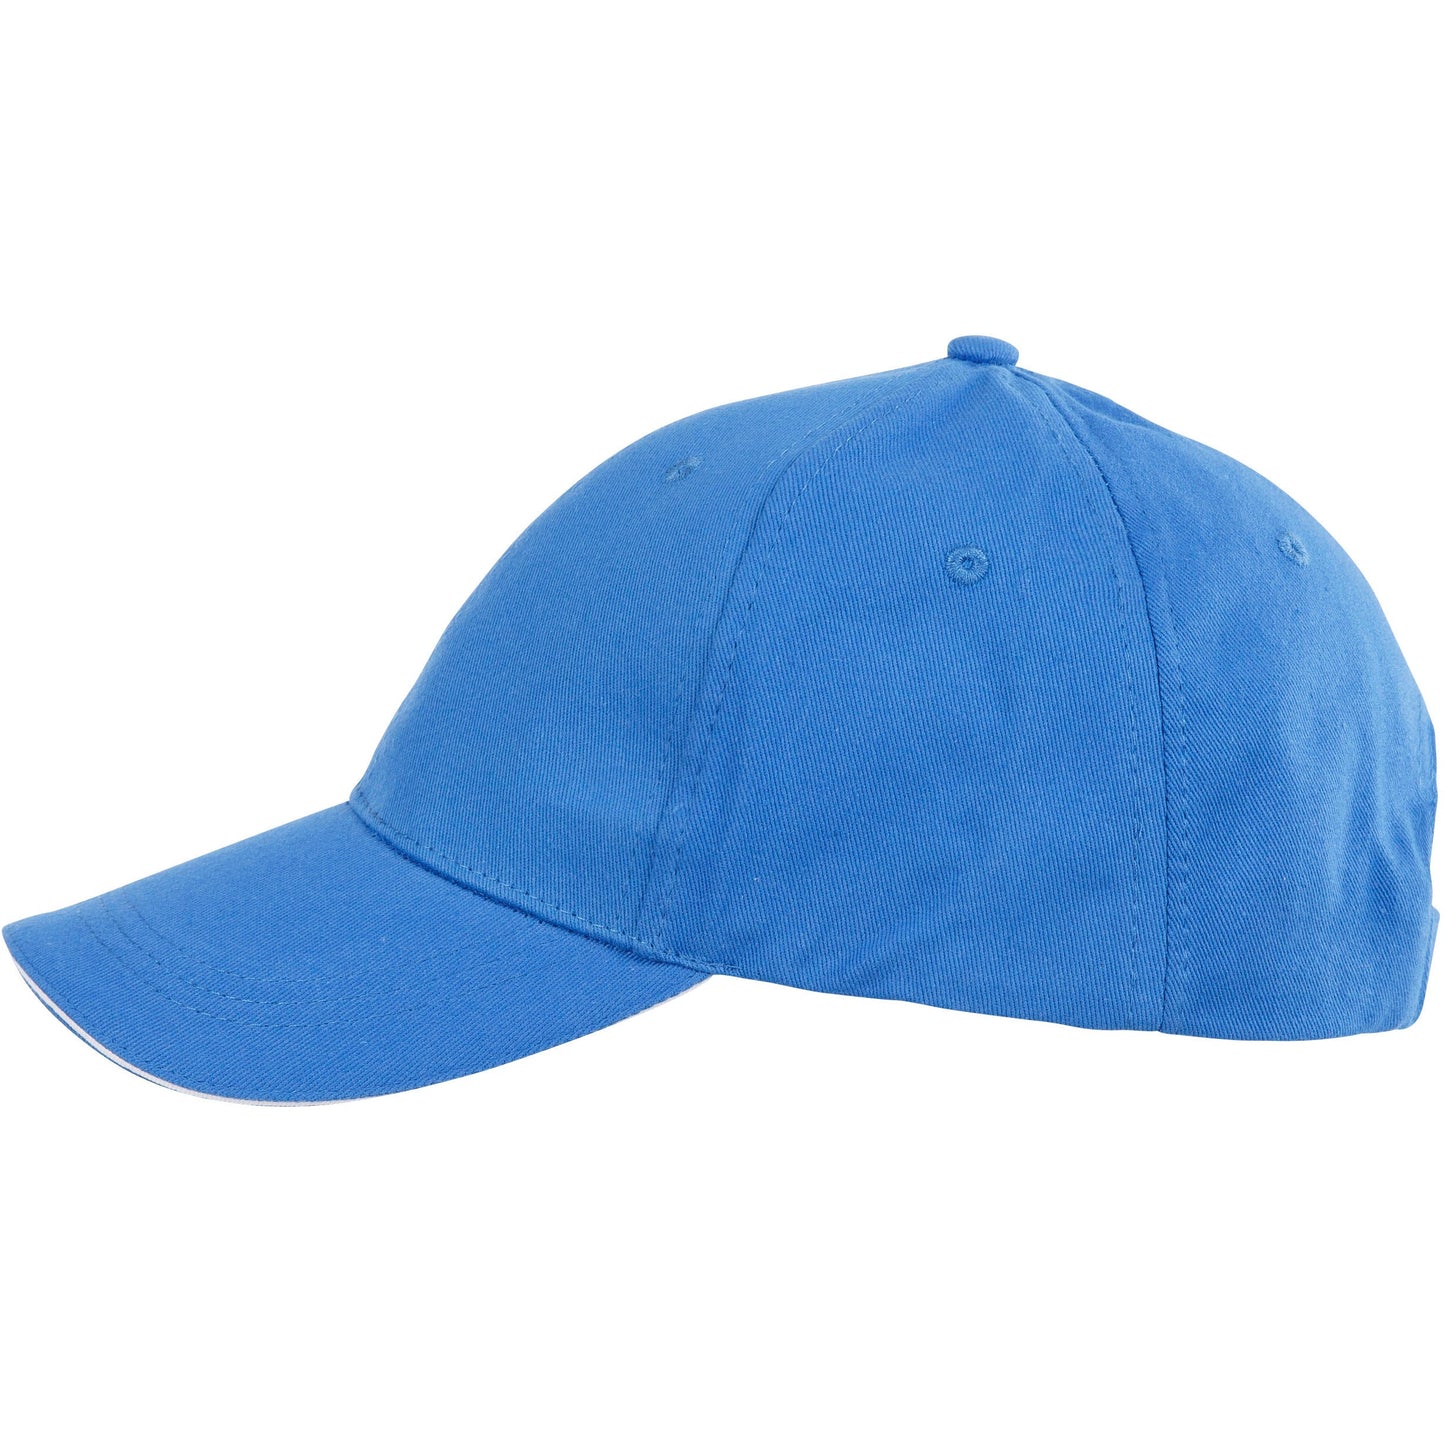 Carrigan - Adults Baseball Cap - Blue